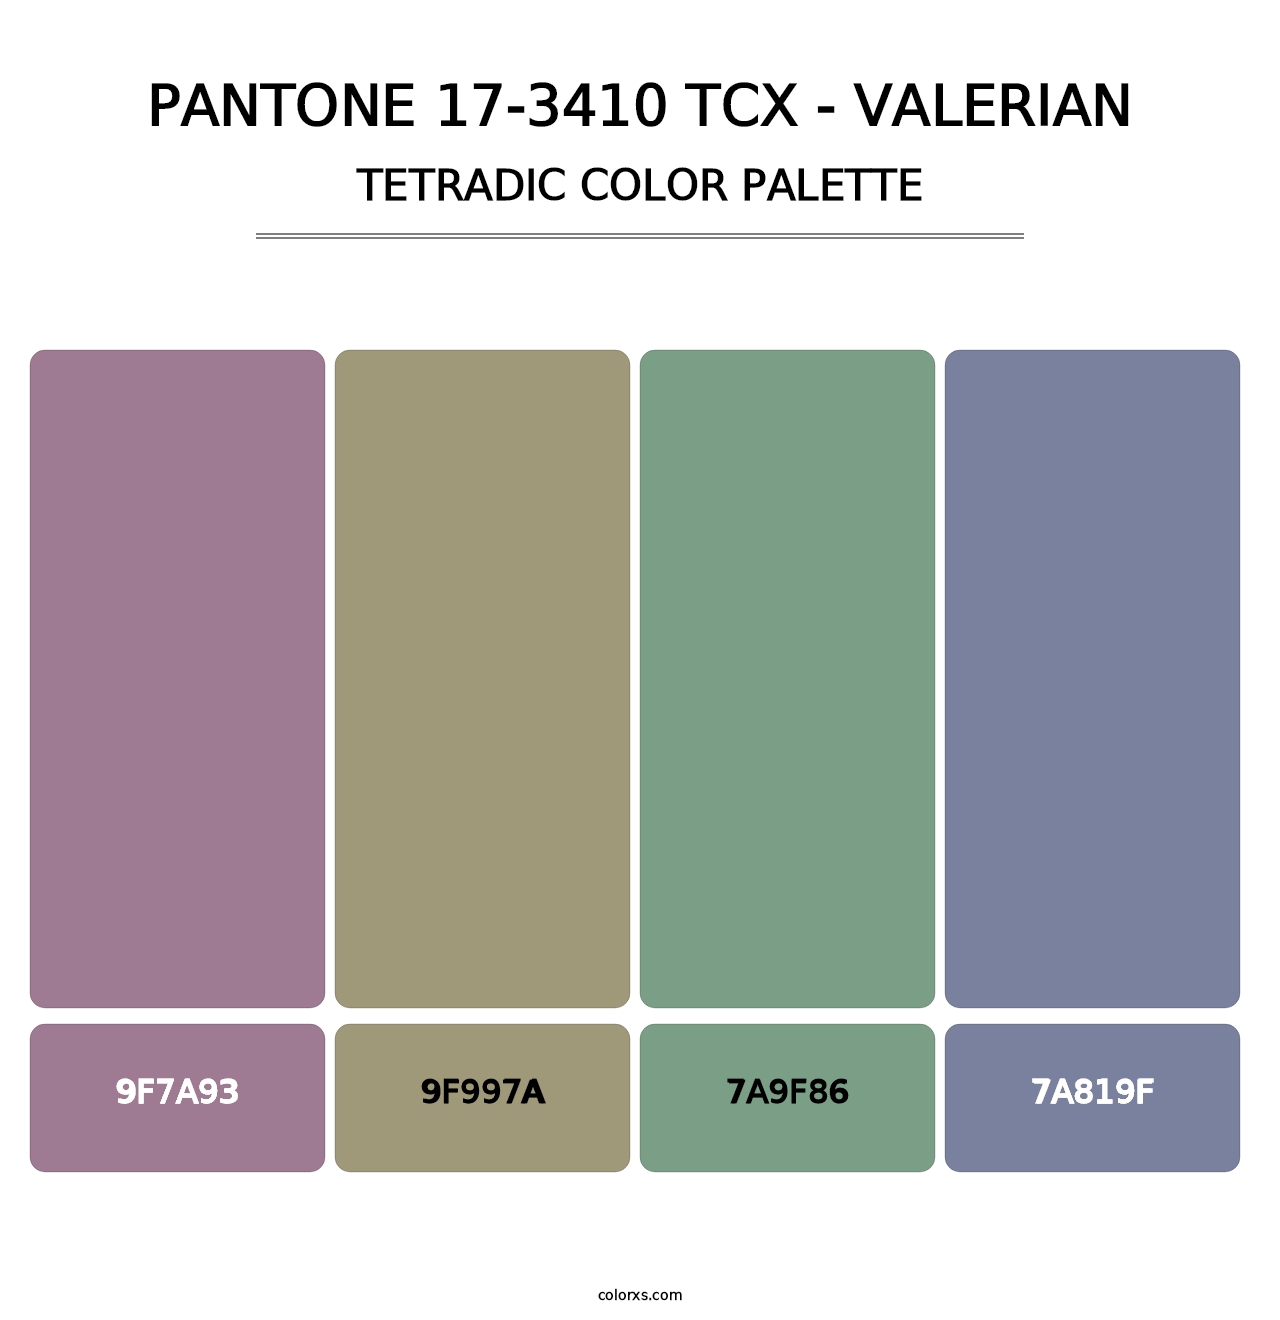 PANTONE 17-3410 TCX - Valerian - Tetradic Color Palette